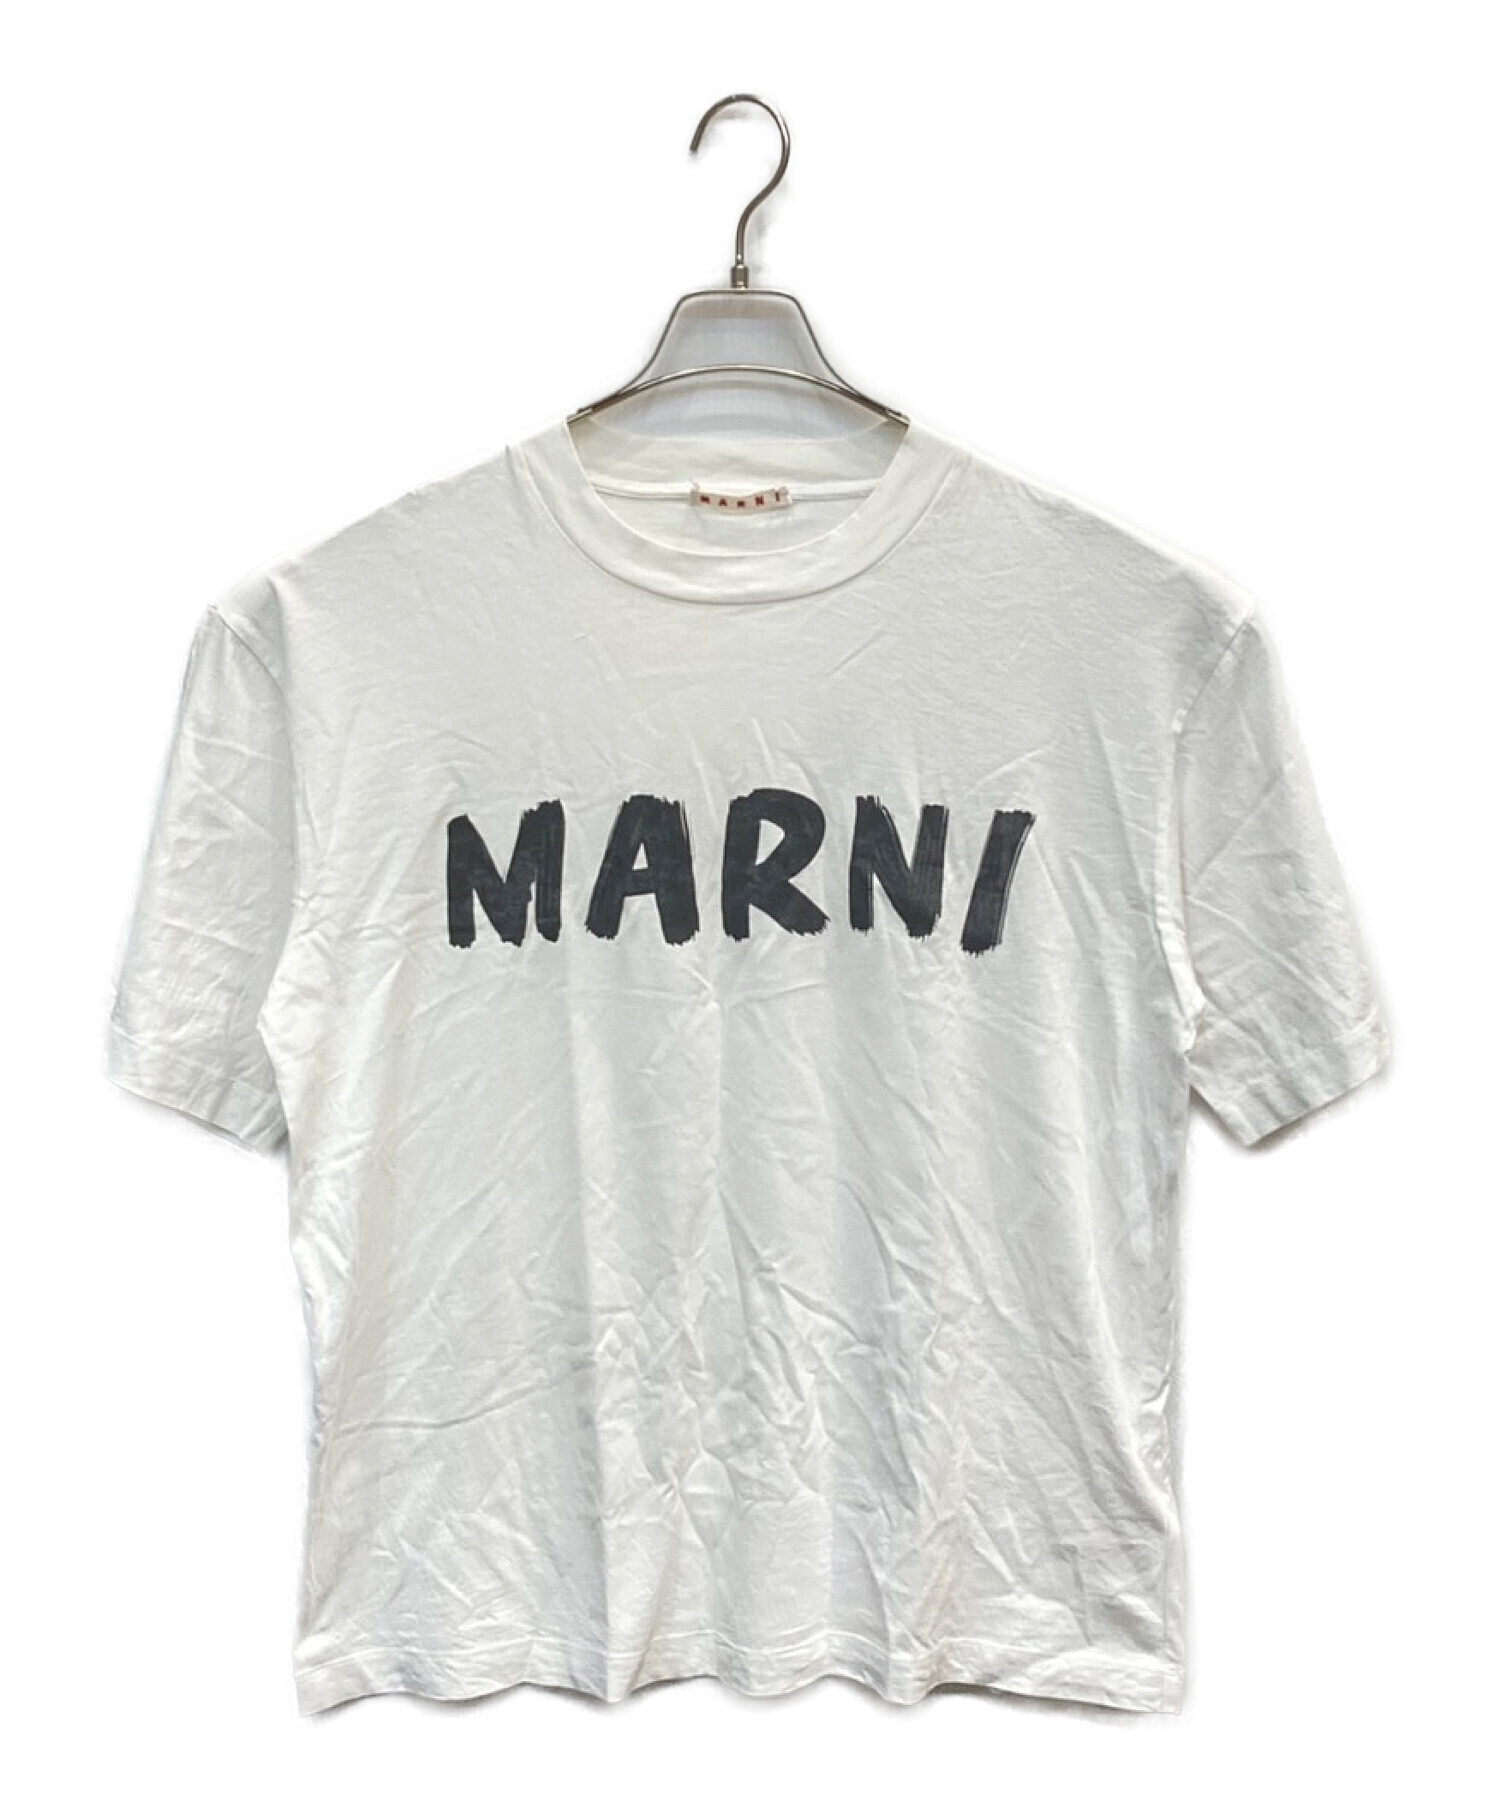 MARNI (マルニ) ロゴTシャツ ホワイト サイズ:38